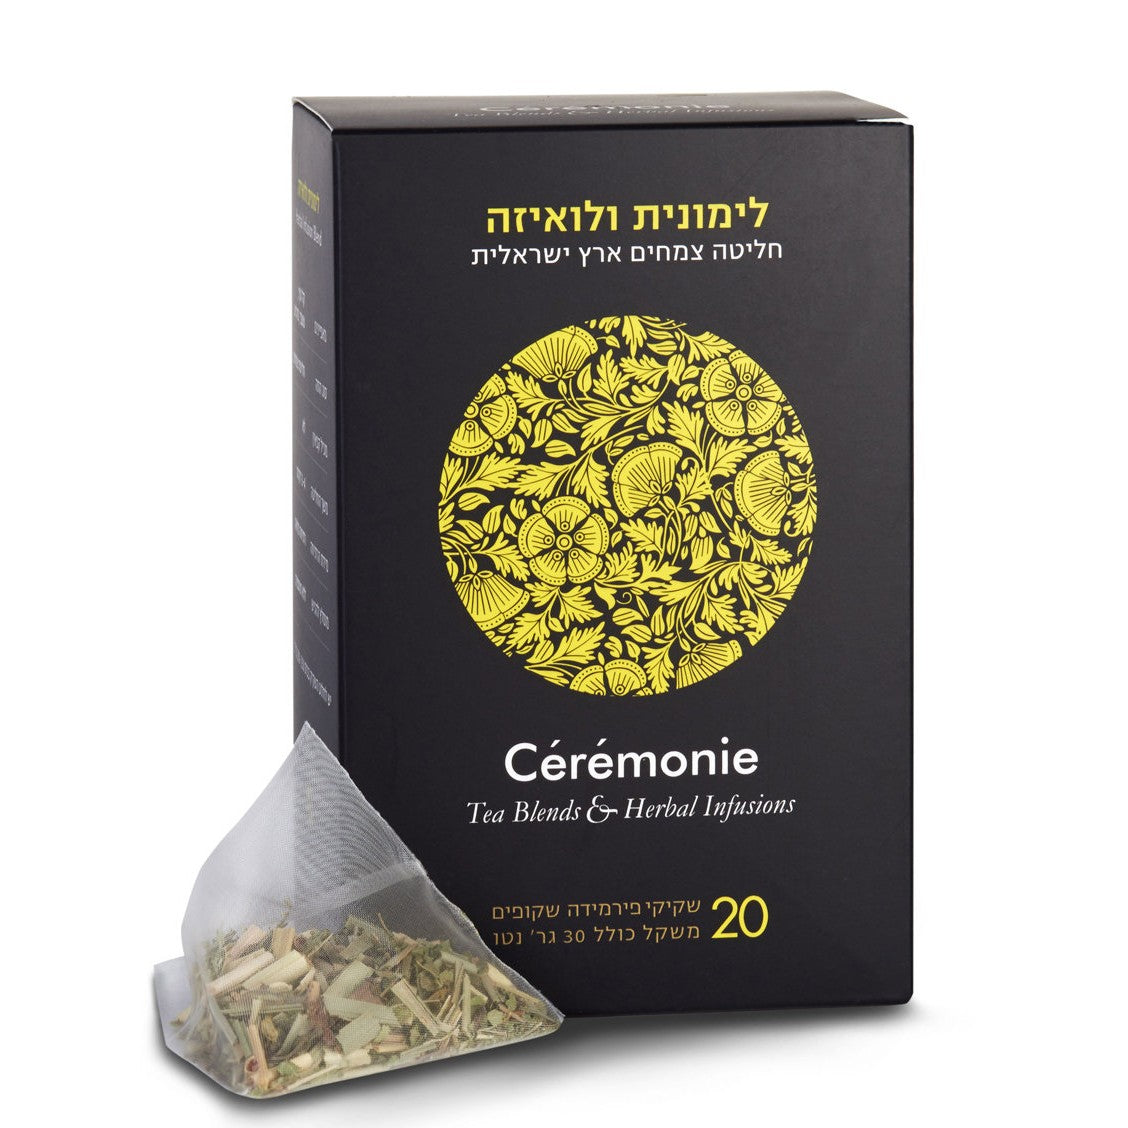 Herbal Infusion Lemon and Louisa pyramids - Ceremonie - Israel Menu